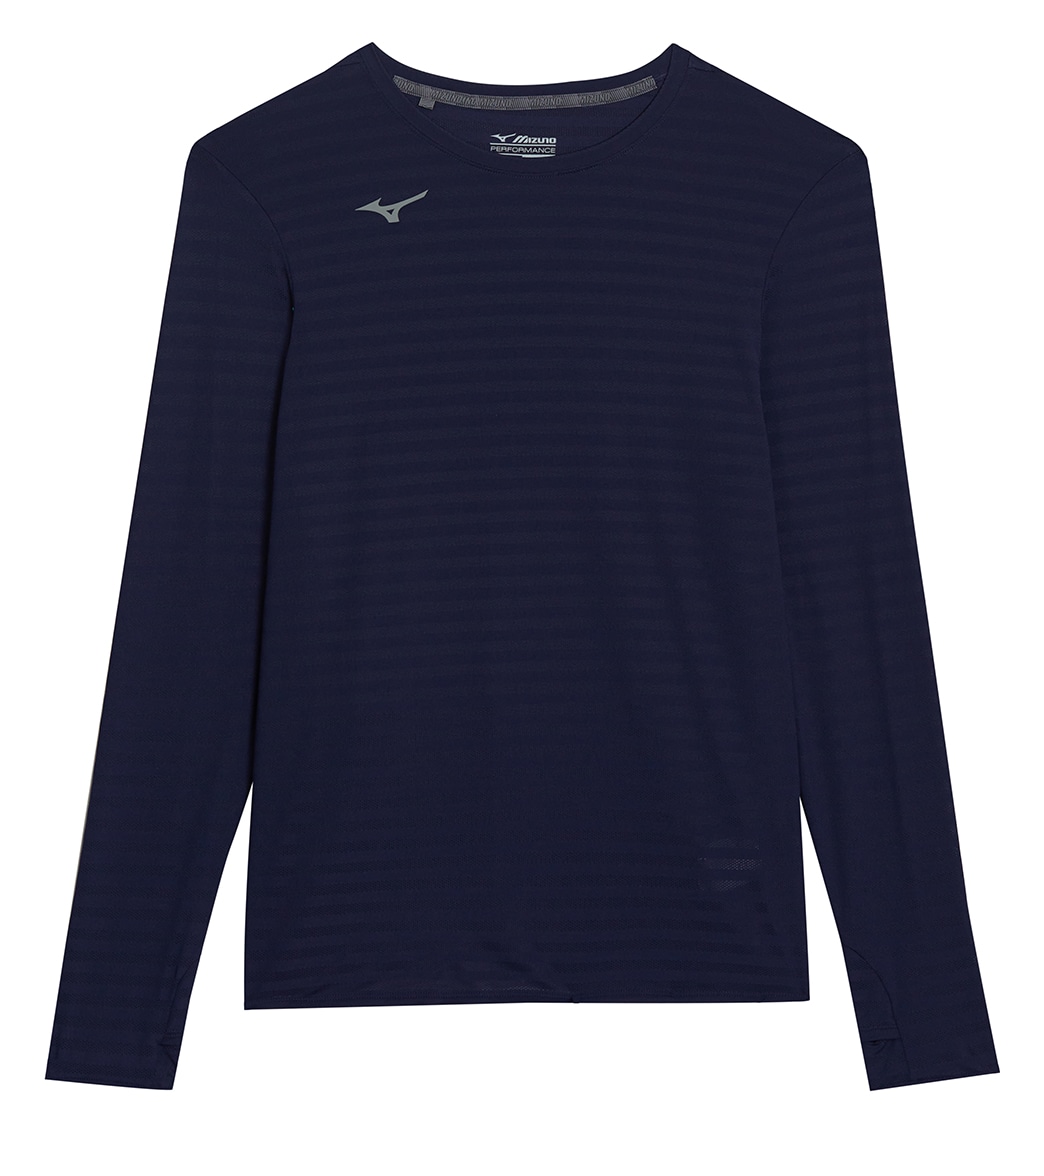 Mizuno Men's Athletic Eco Long Sleeve Top Shirt - Navy Medium - Swimoutlet.com